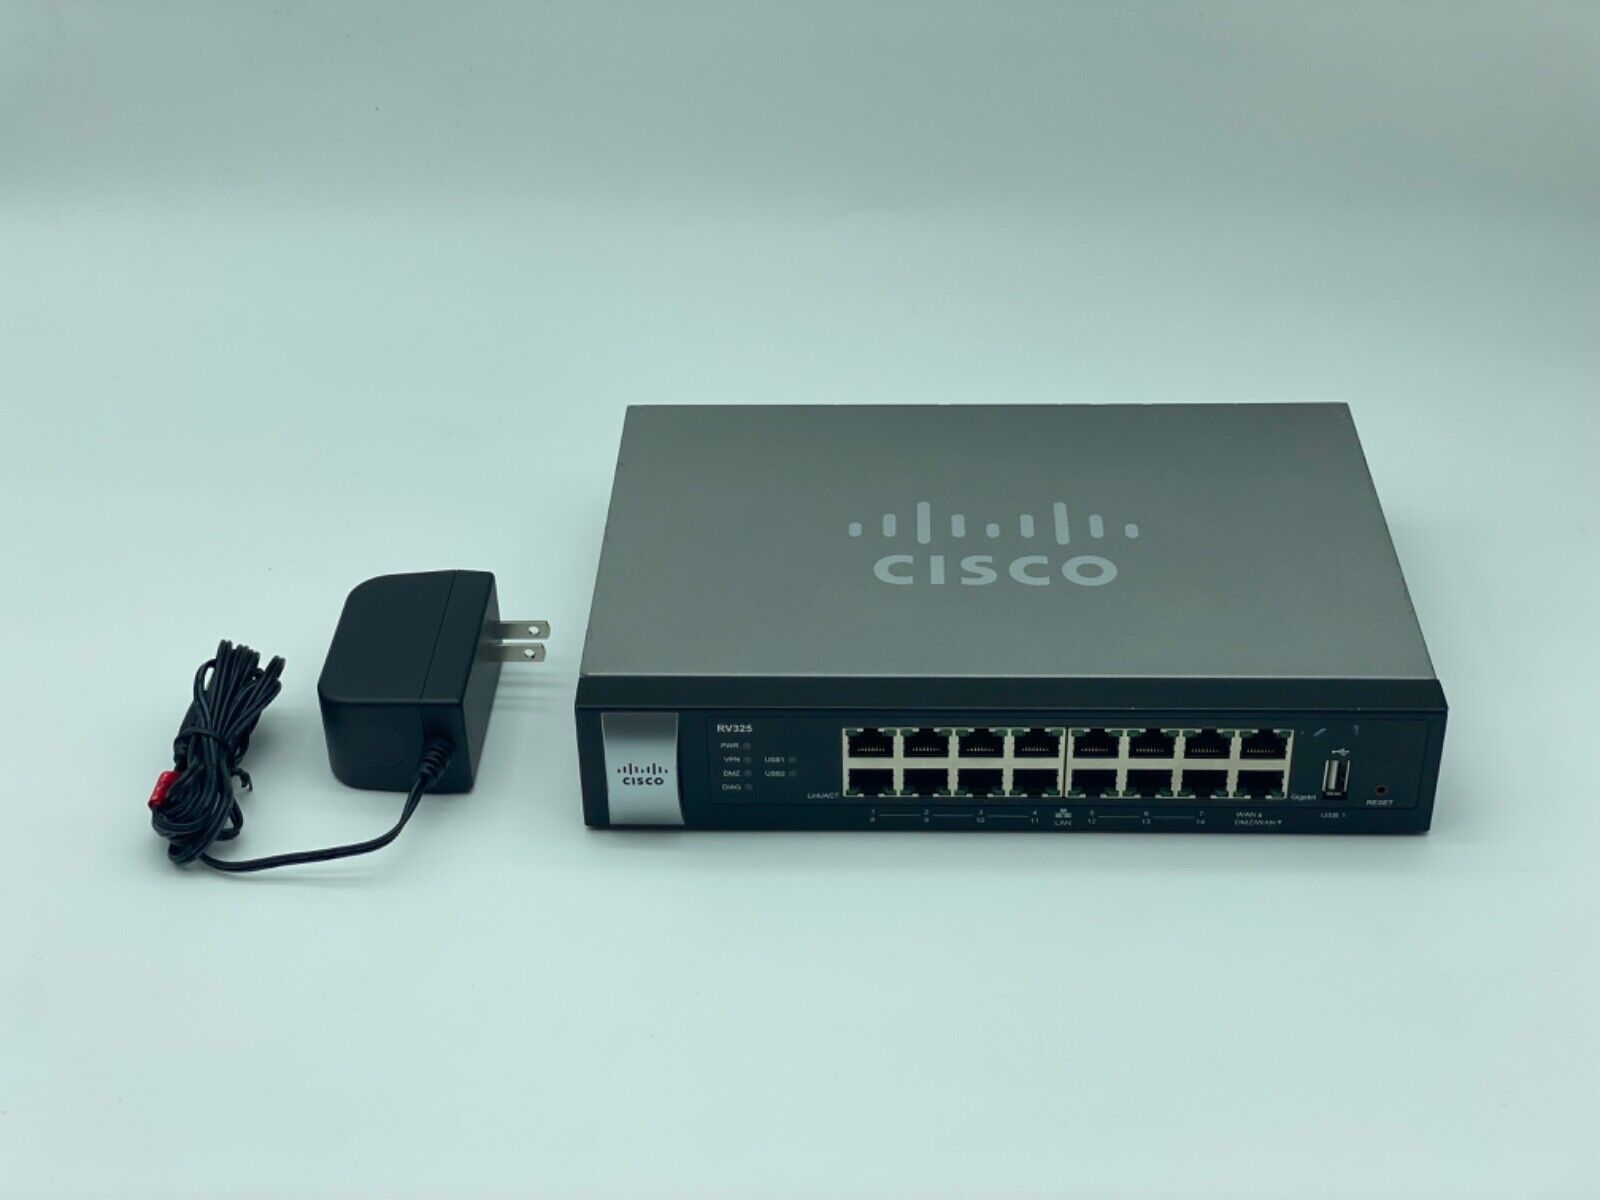 Cisco RV345 16-Port Gigabit Router with Dual WAN MFR #RV345-K9-NA 0R20290#3